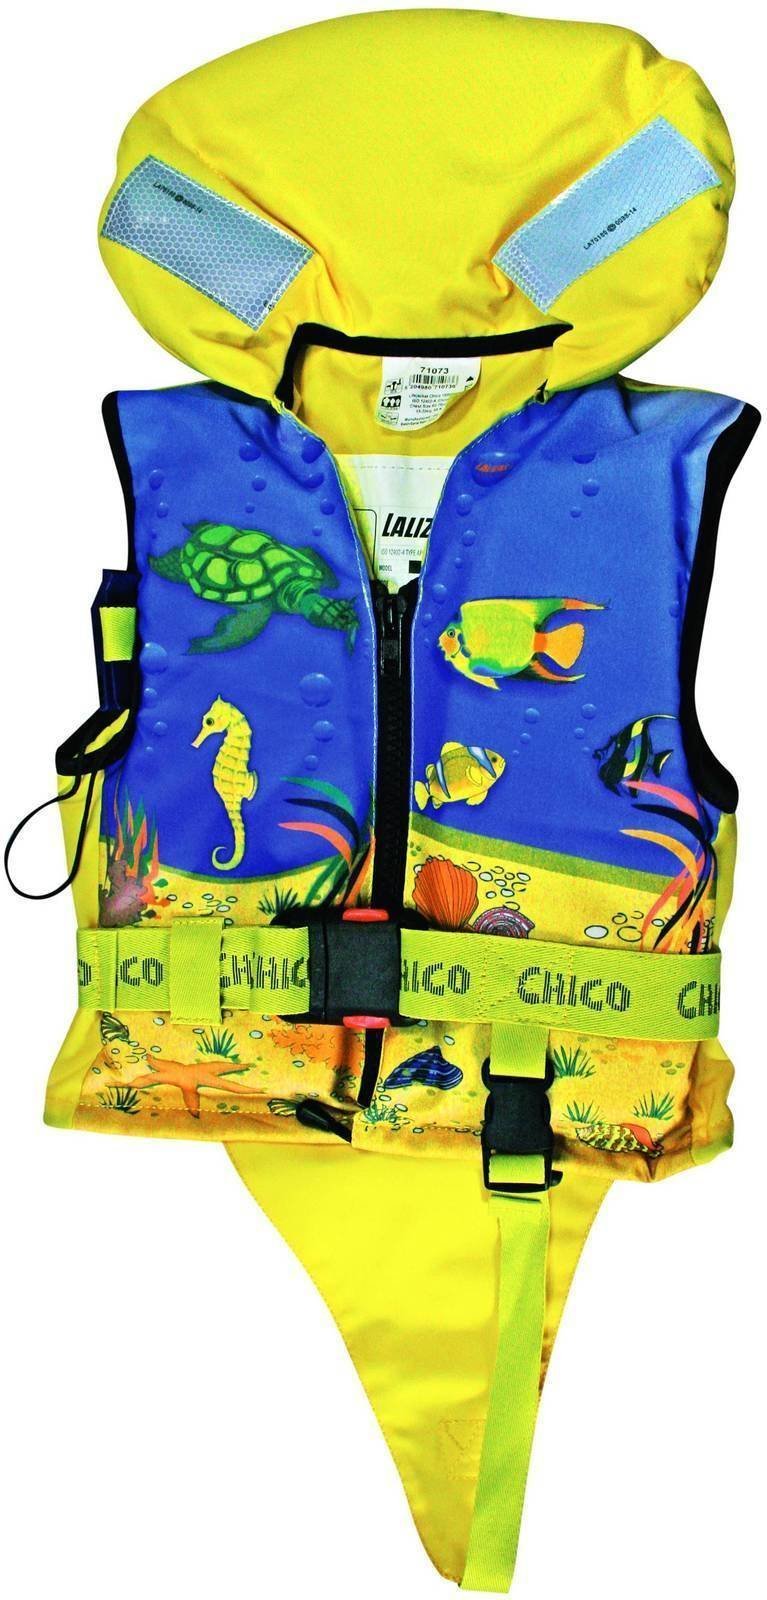 Life Jacket Lalizas Chico Lifejacket 15-30kg